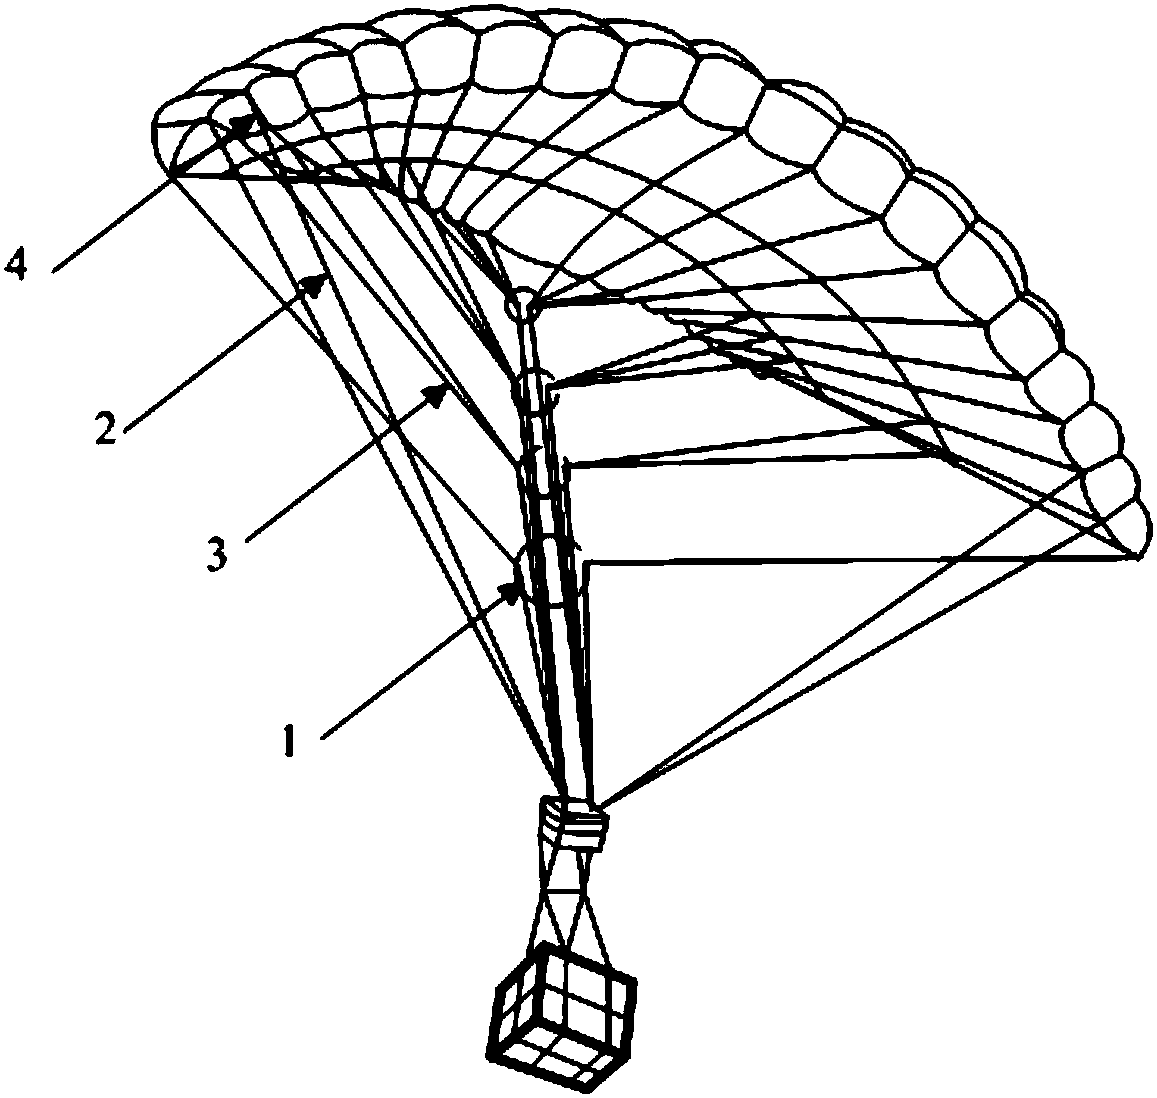 Method for reducing opening shock of ram air parachute